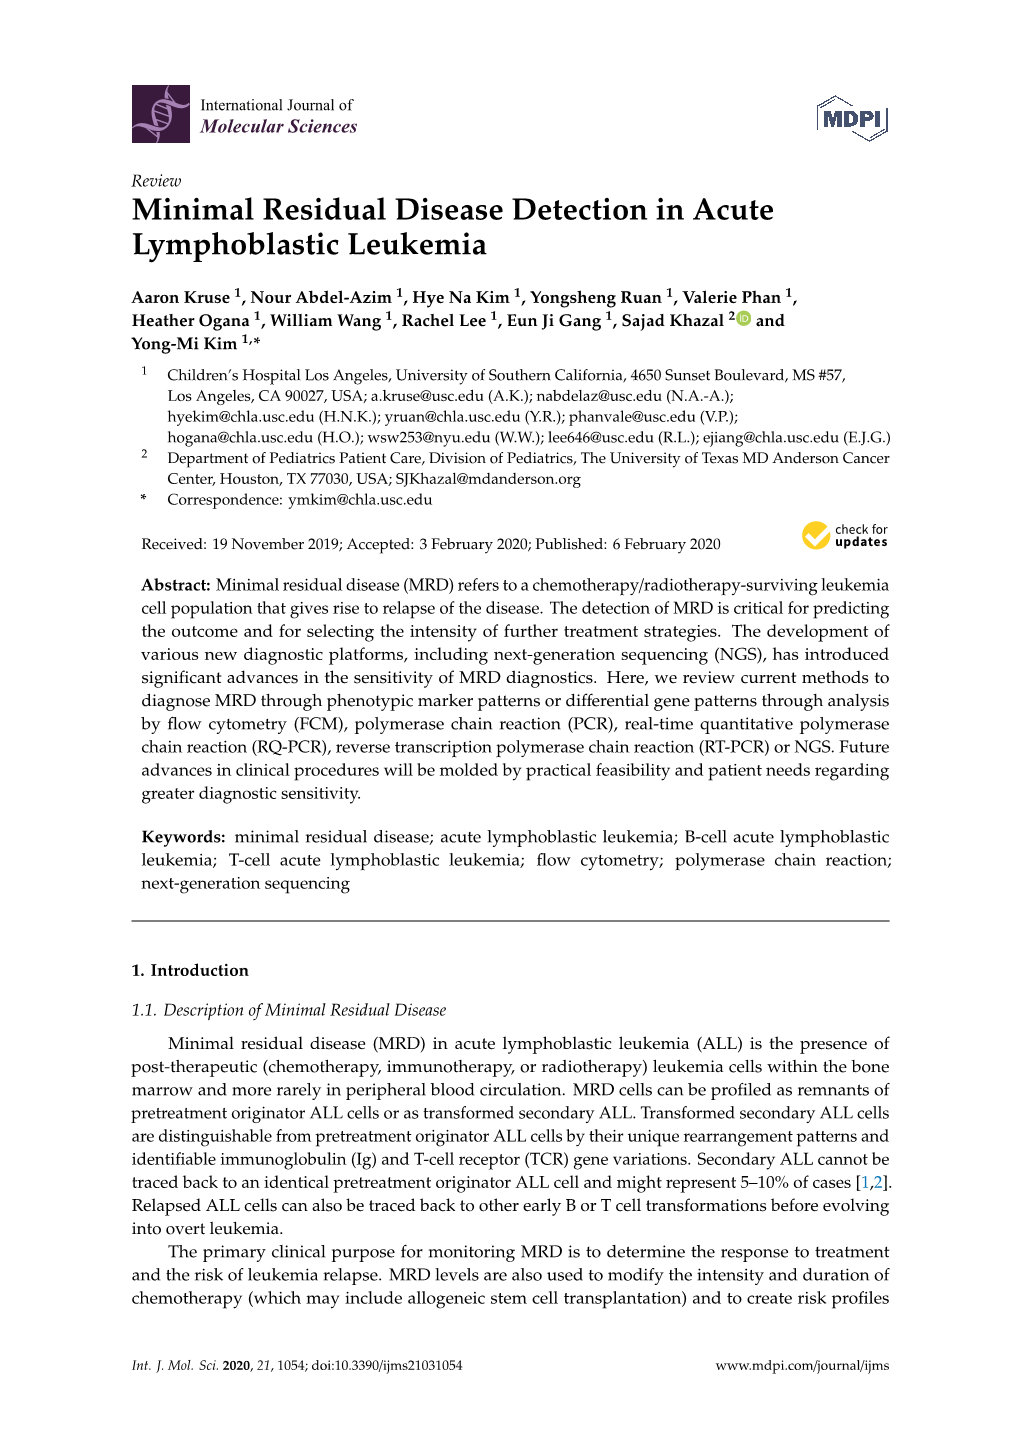 Minimal Residual Disease Detection in Acute Lymphoblastic Leukemia